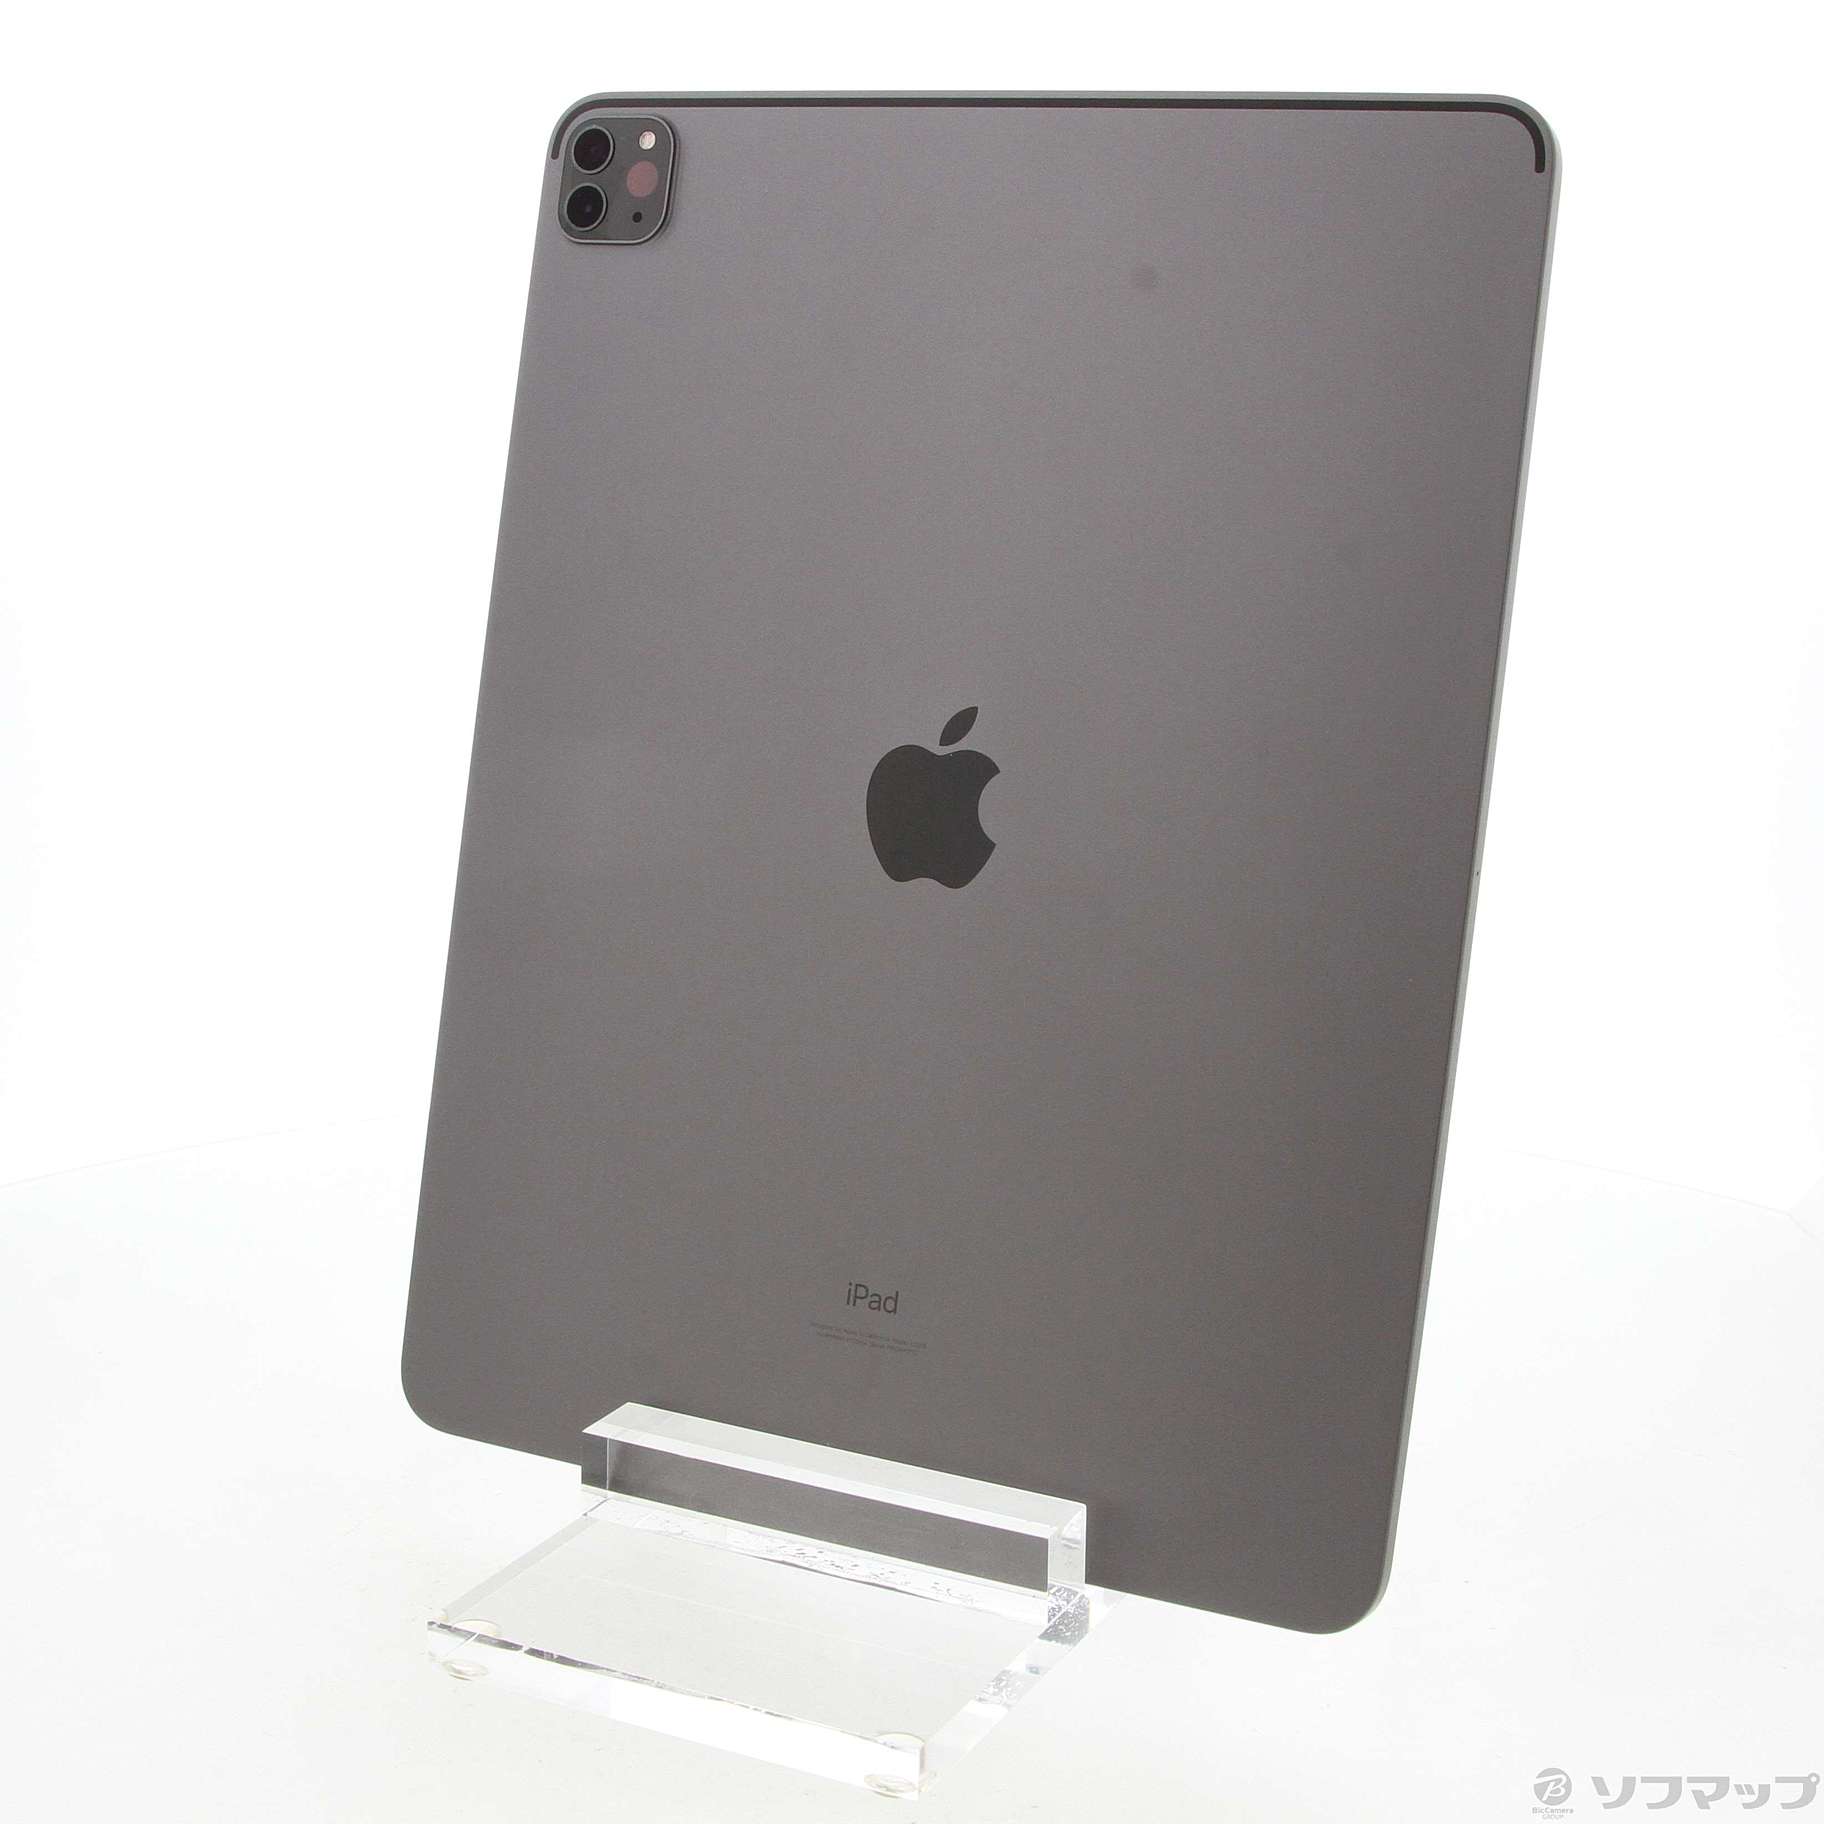 iPadPro 12.9 第5世代 256GB Wi-Fi スペースグレイ 美品-